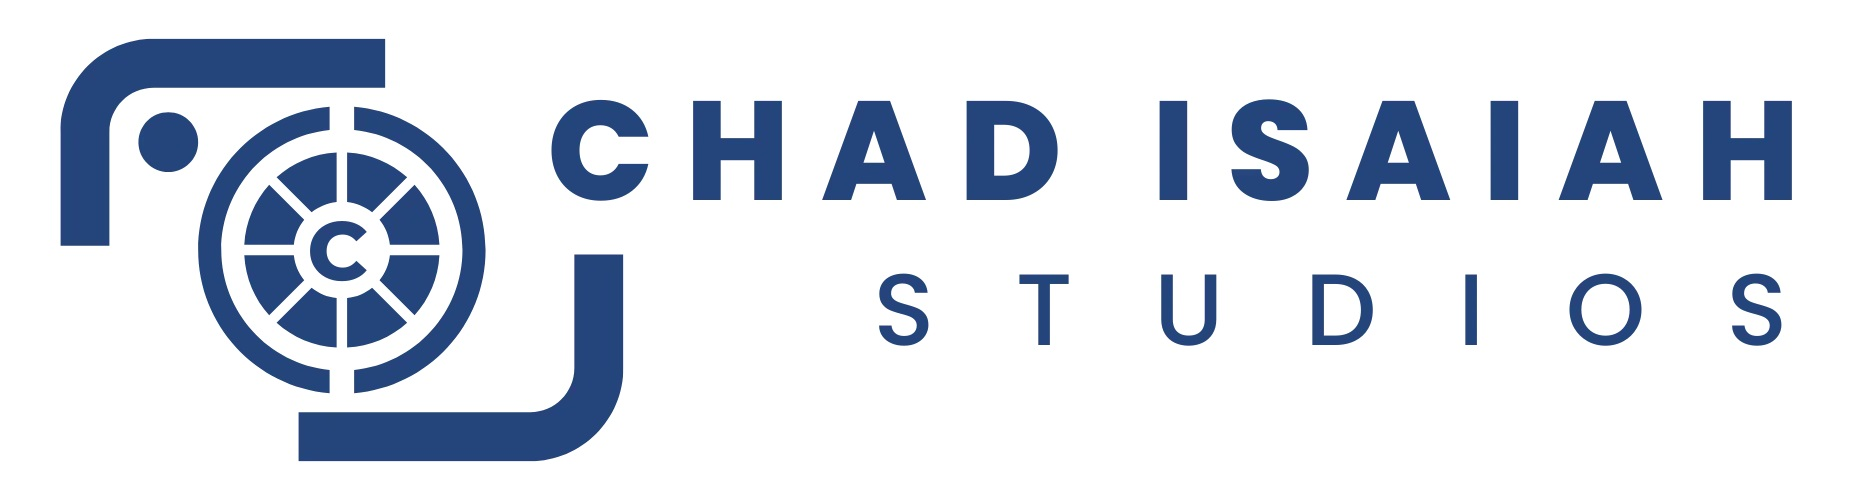 Chad-Isaiah-Studios-Logo-Transparent